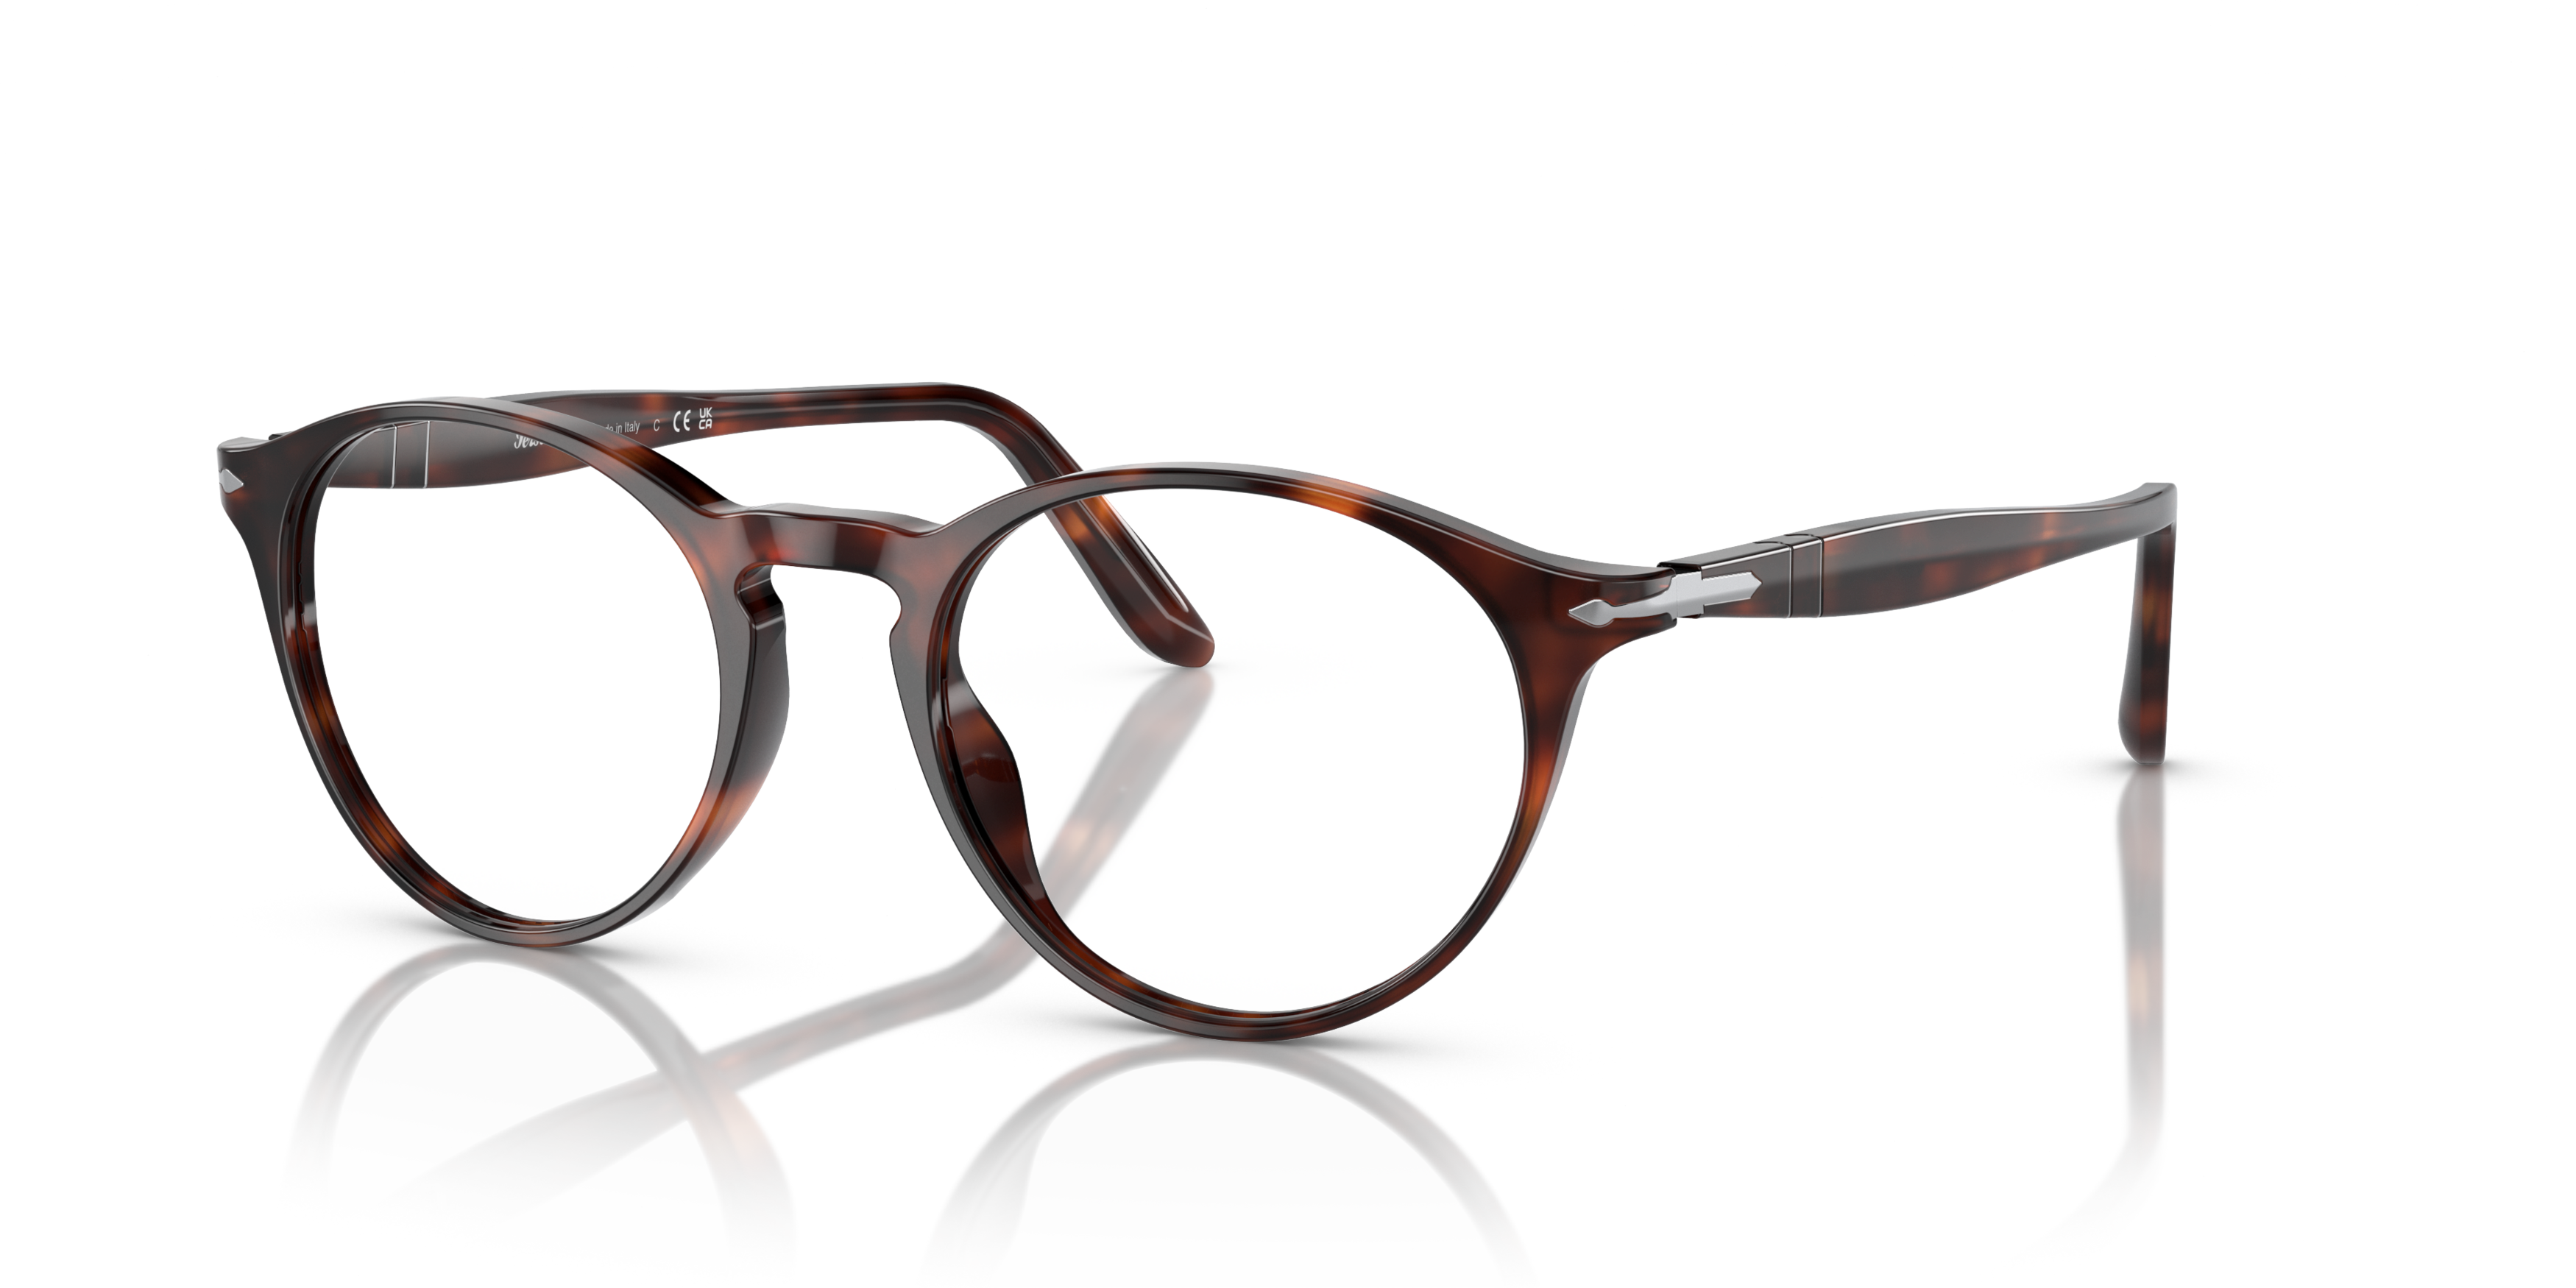 Angle_Left01 Persol PO 3092V Glasses Transparent / Tortoise Shell